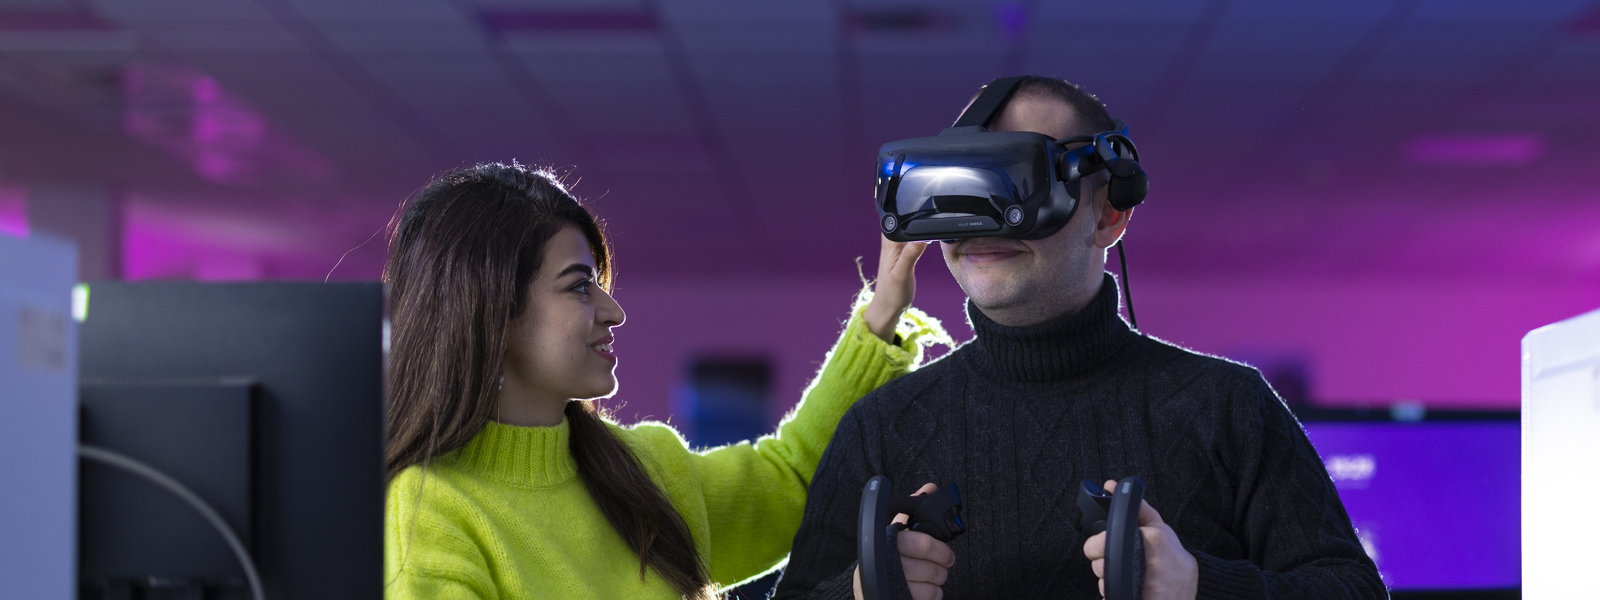 Students using virtual reality equipment